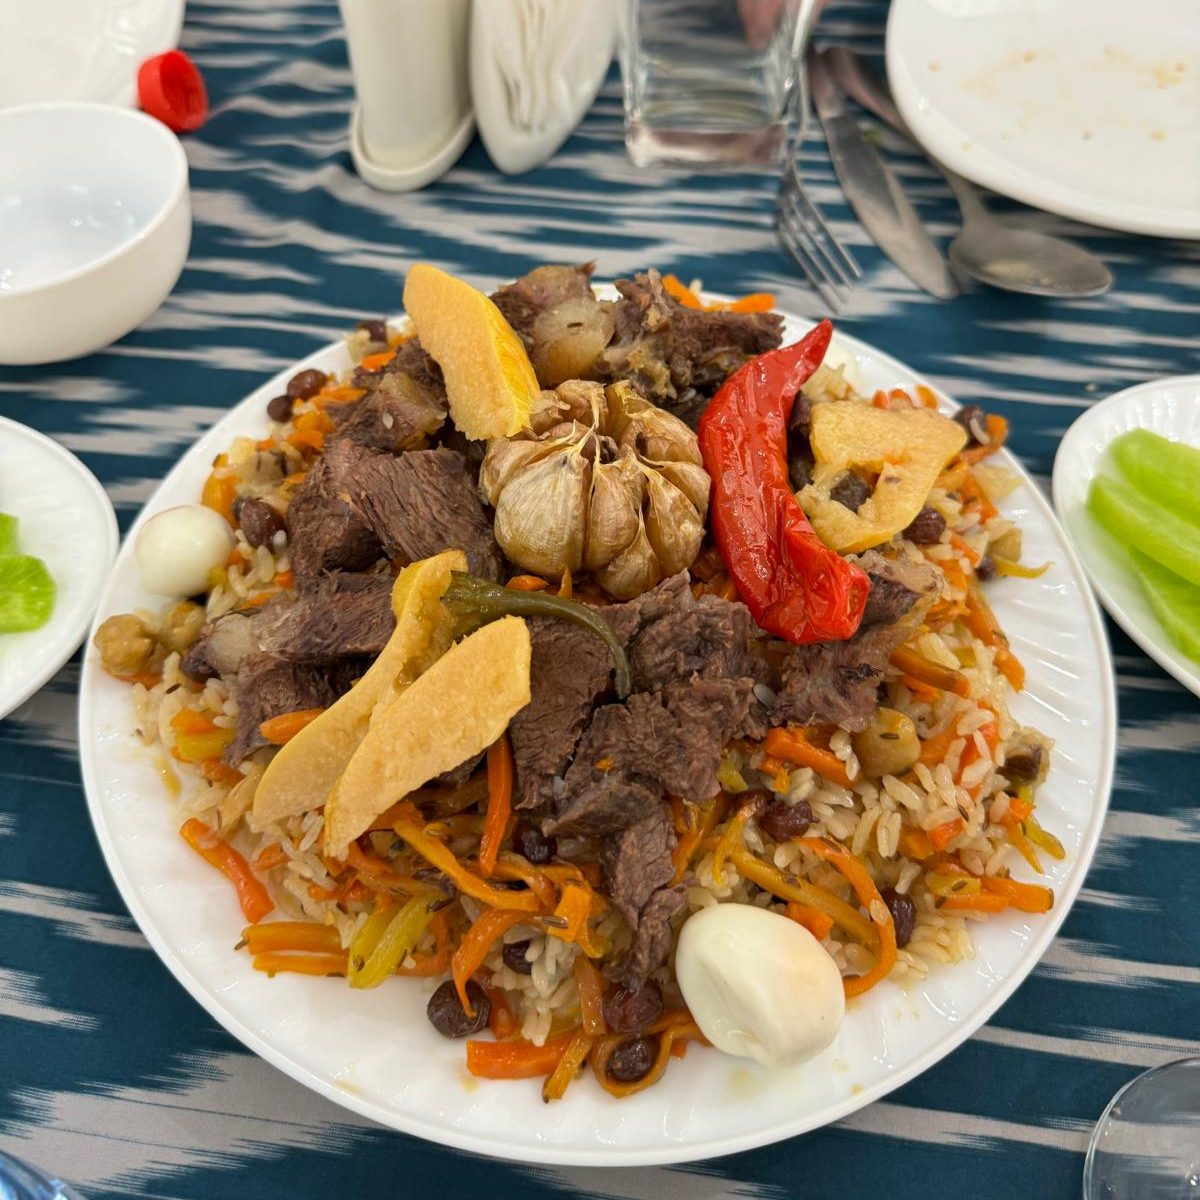 Central Asian Cuisine - Pilaf